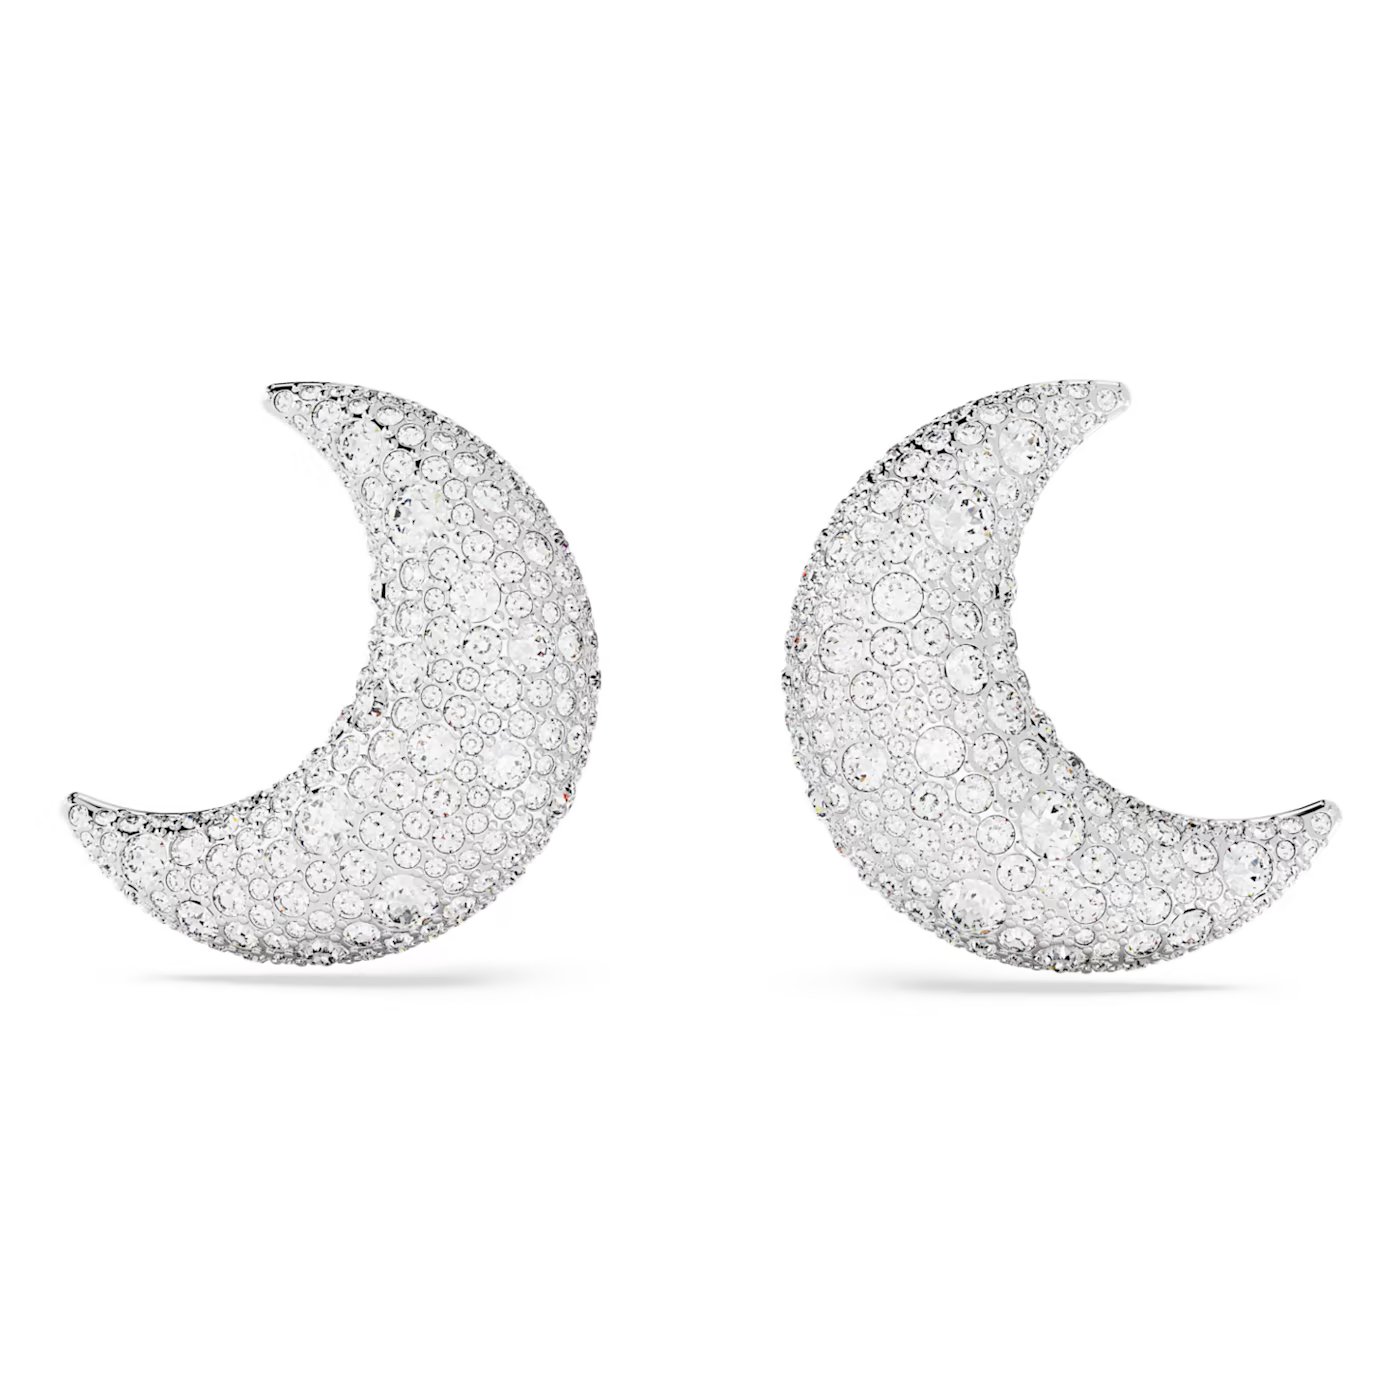 64dcc5ed67a6c_luna-clip-earrings--moon--white--rhodium-plated-swarovski-5666158.jpg